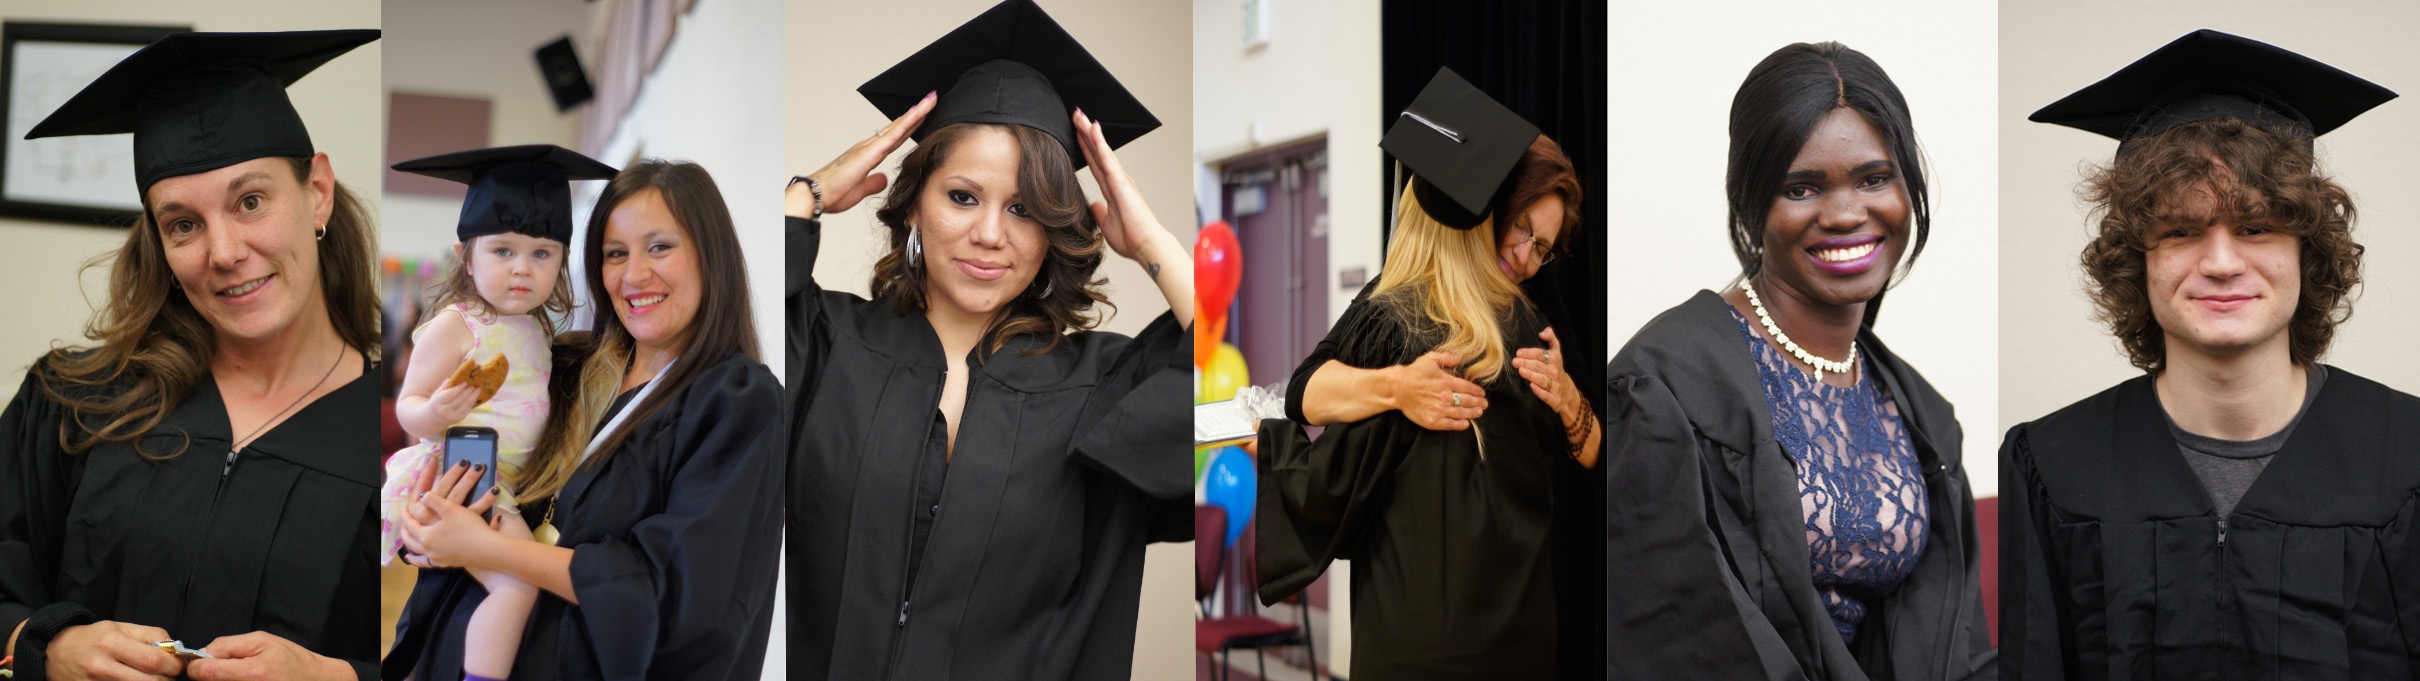 photos of high school equivalency graduates